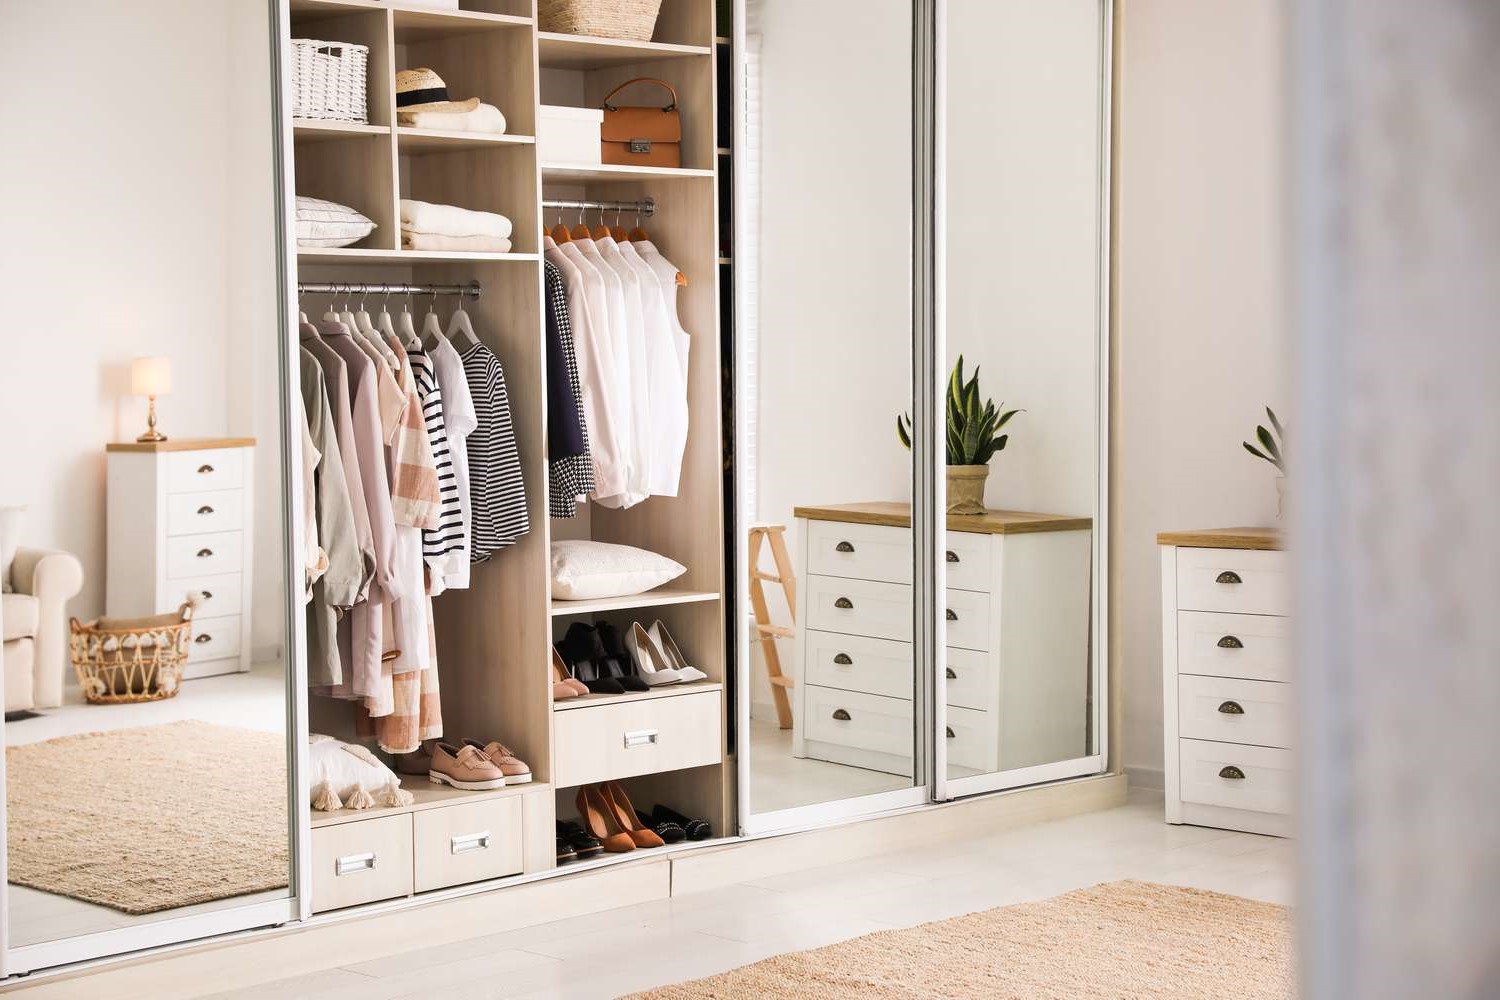 How To Organize A Closet On A Budget